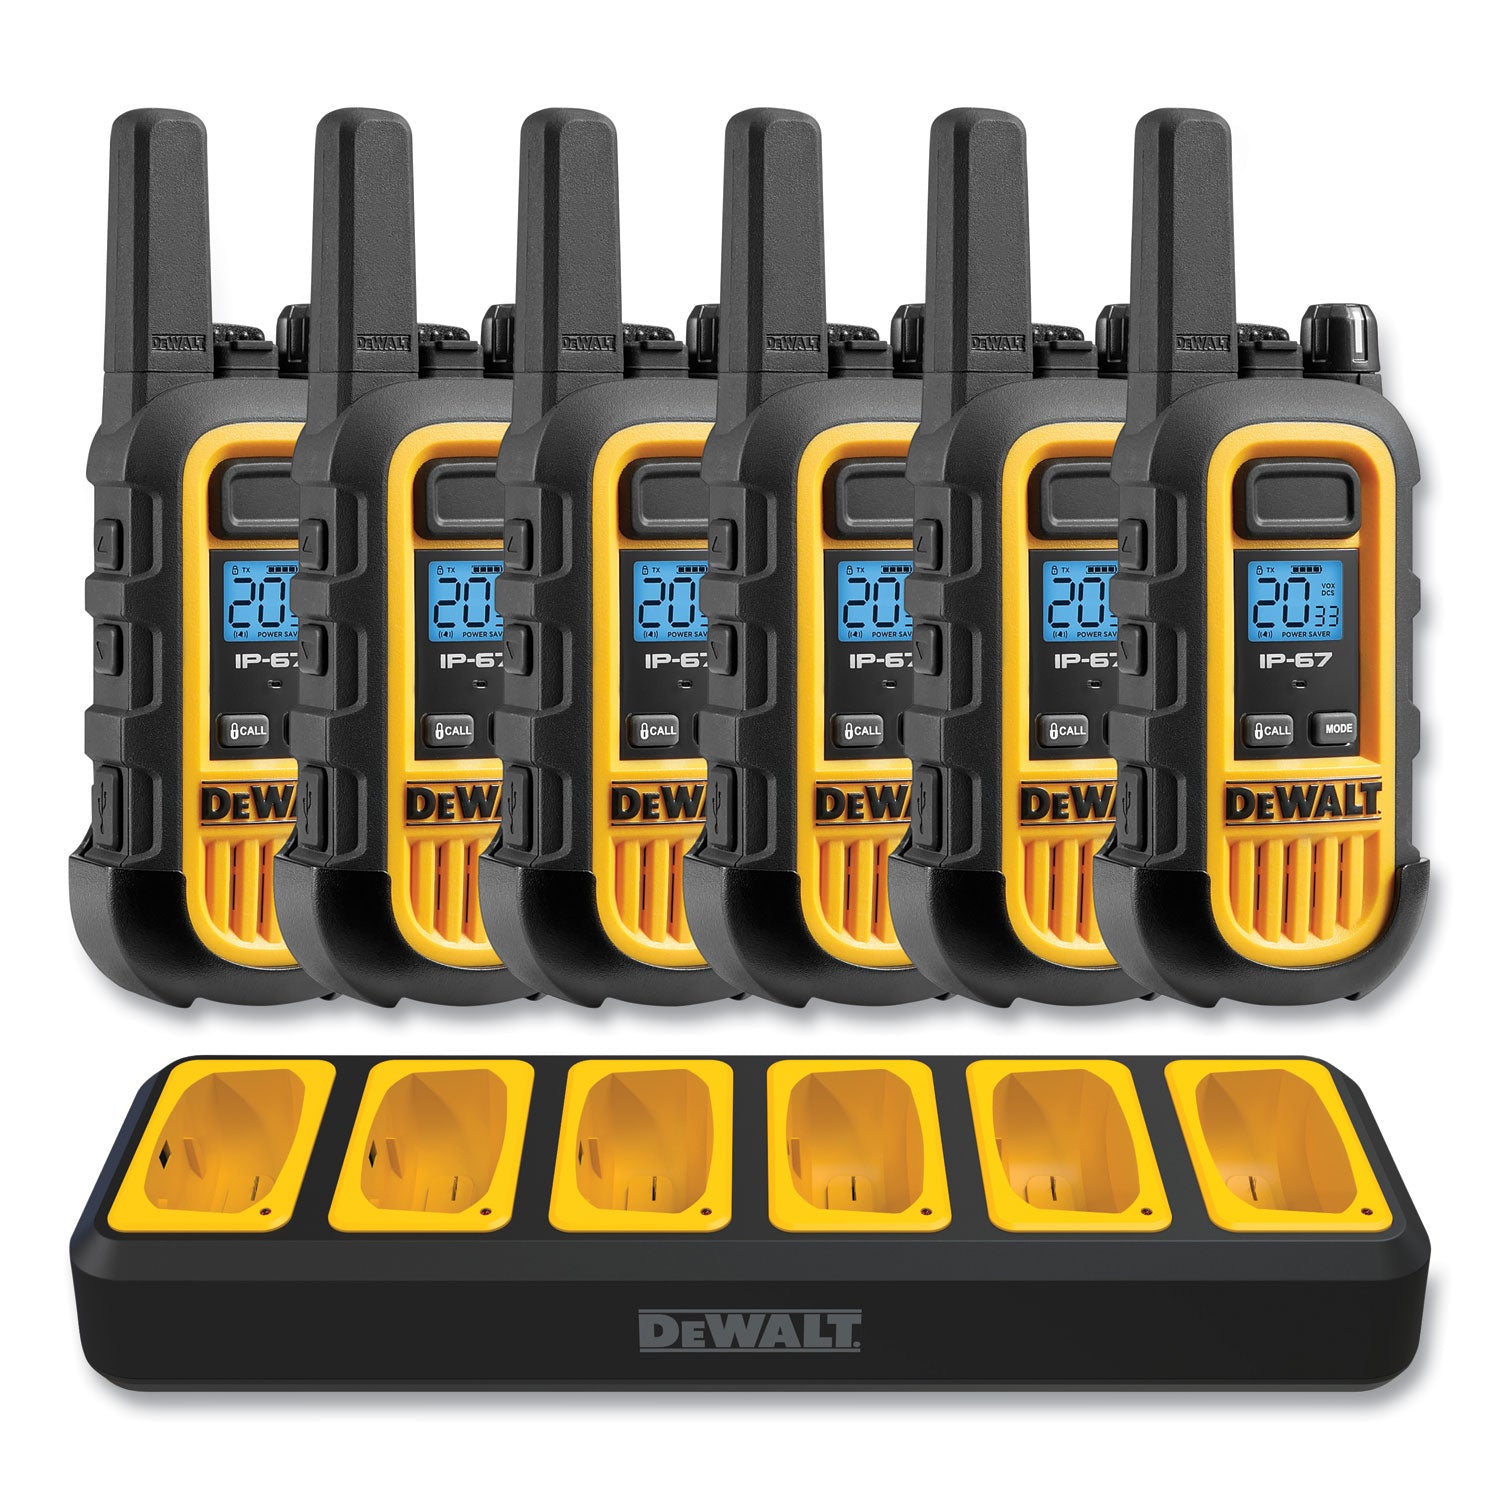 dxfrs300bch-heavy-duty-walkie-talkies-1-w-22-channels_sehdxfrs300bch - 1